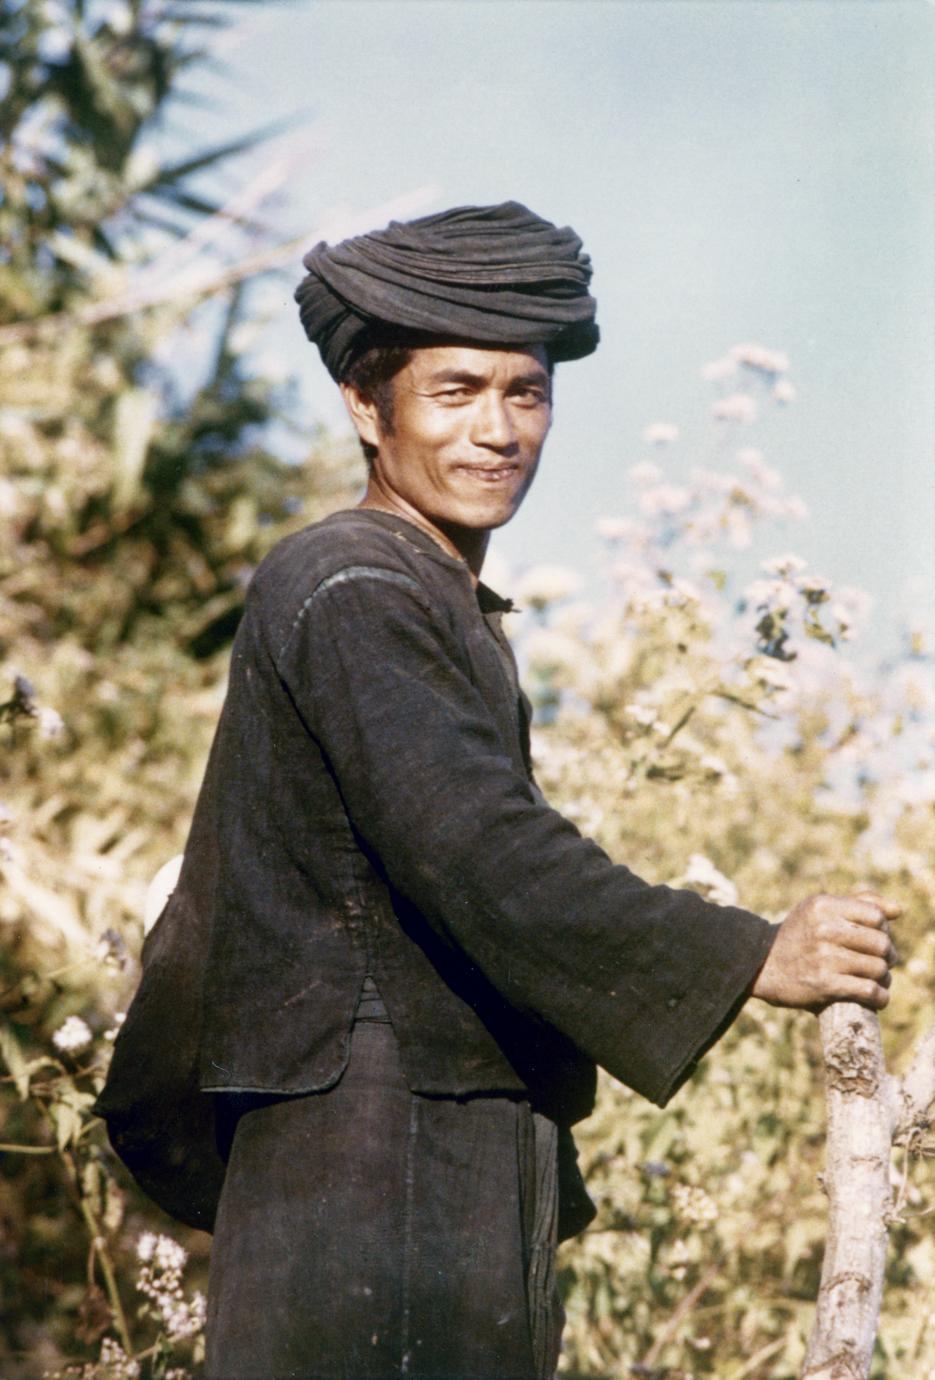 An Akha man works in his field in Houa Khong Province